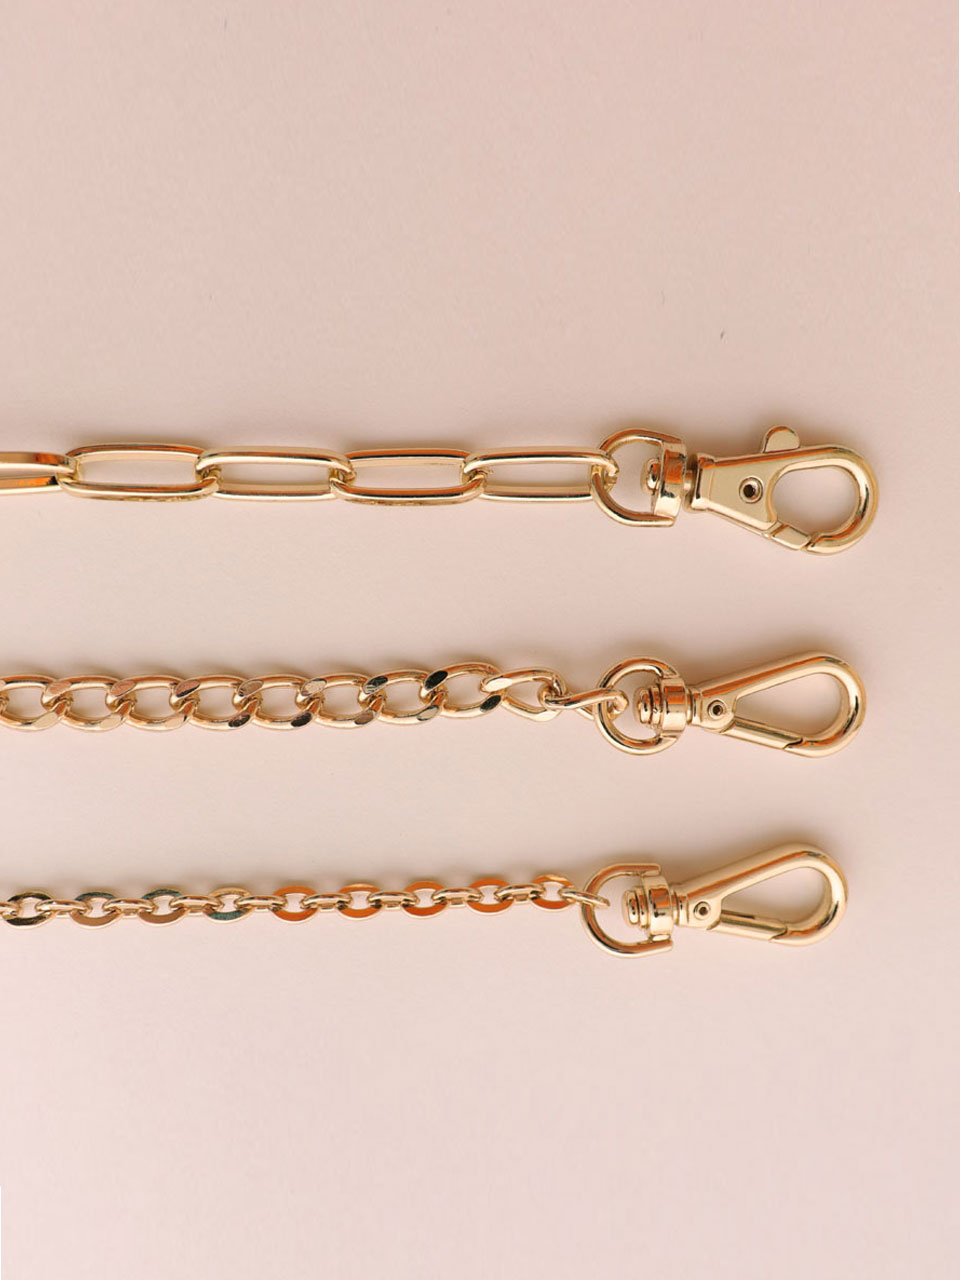 Chain strap - gold